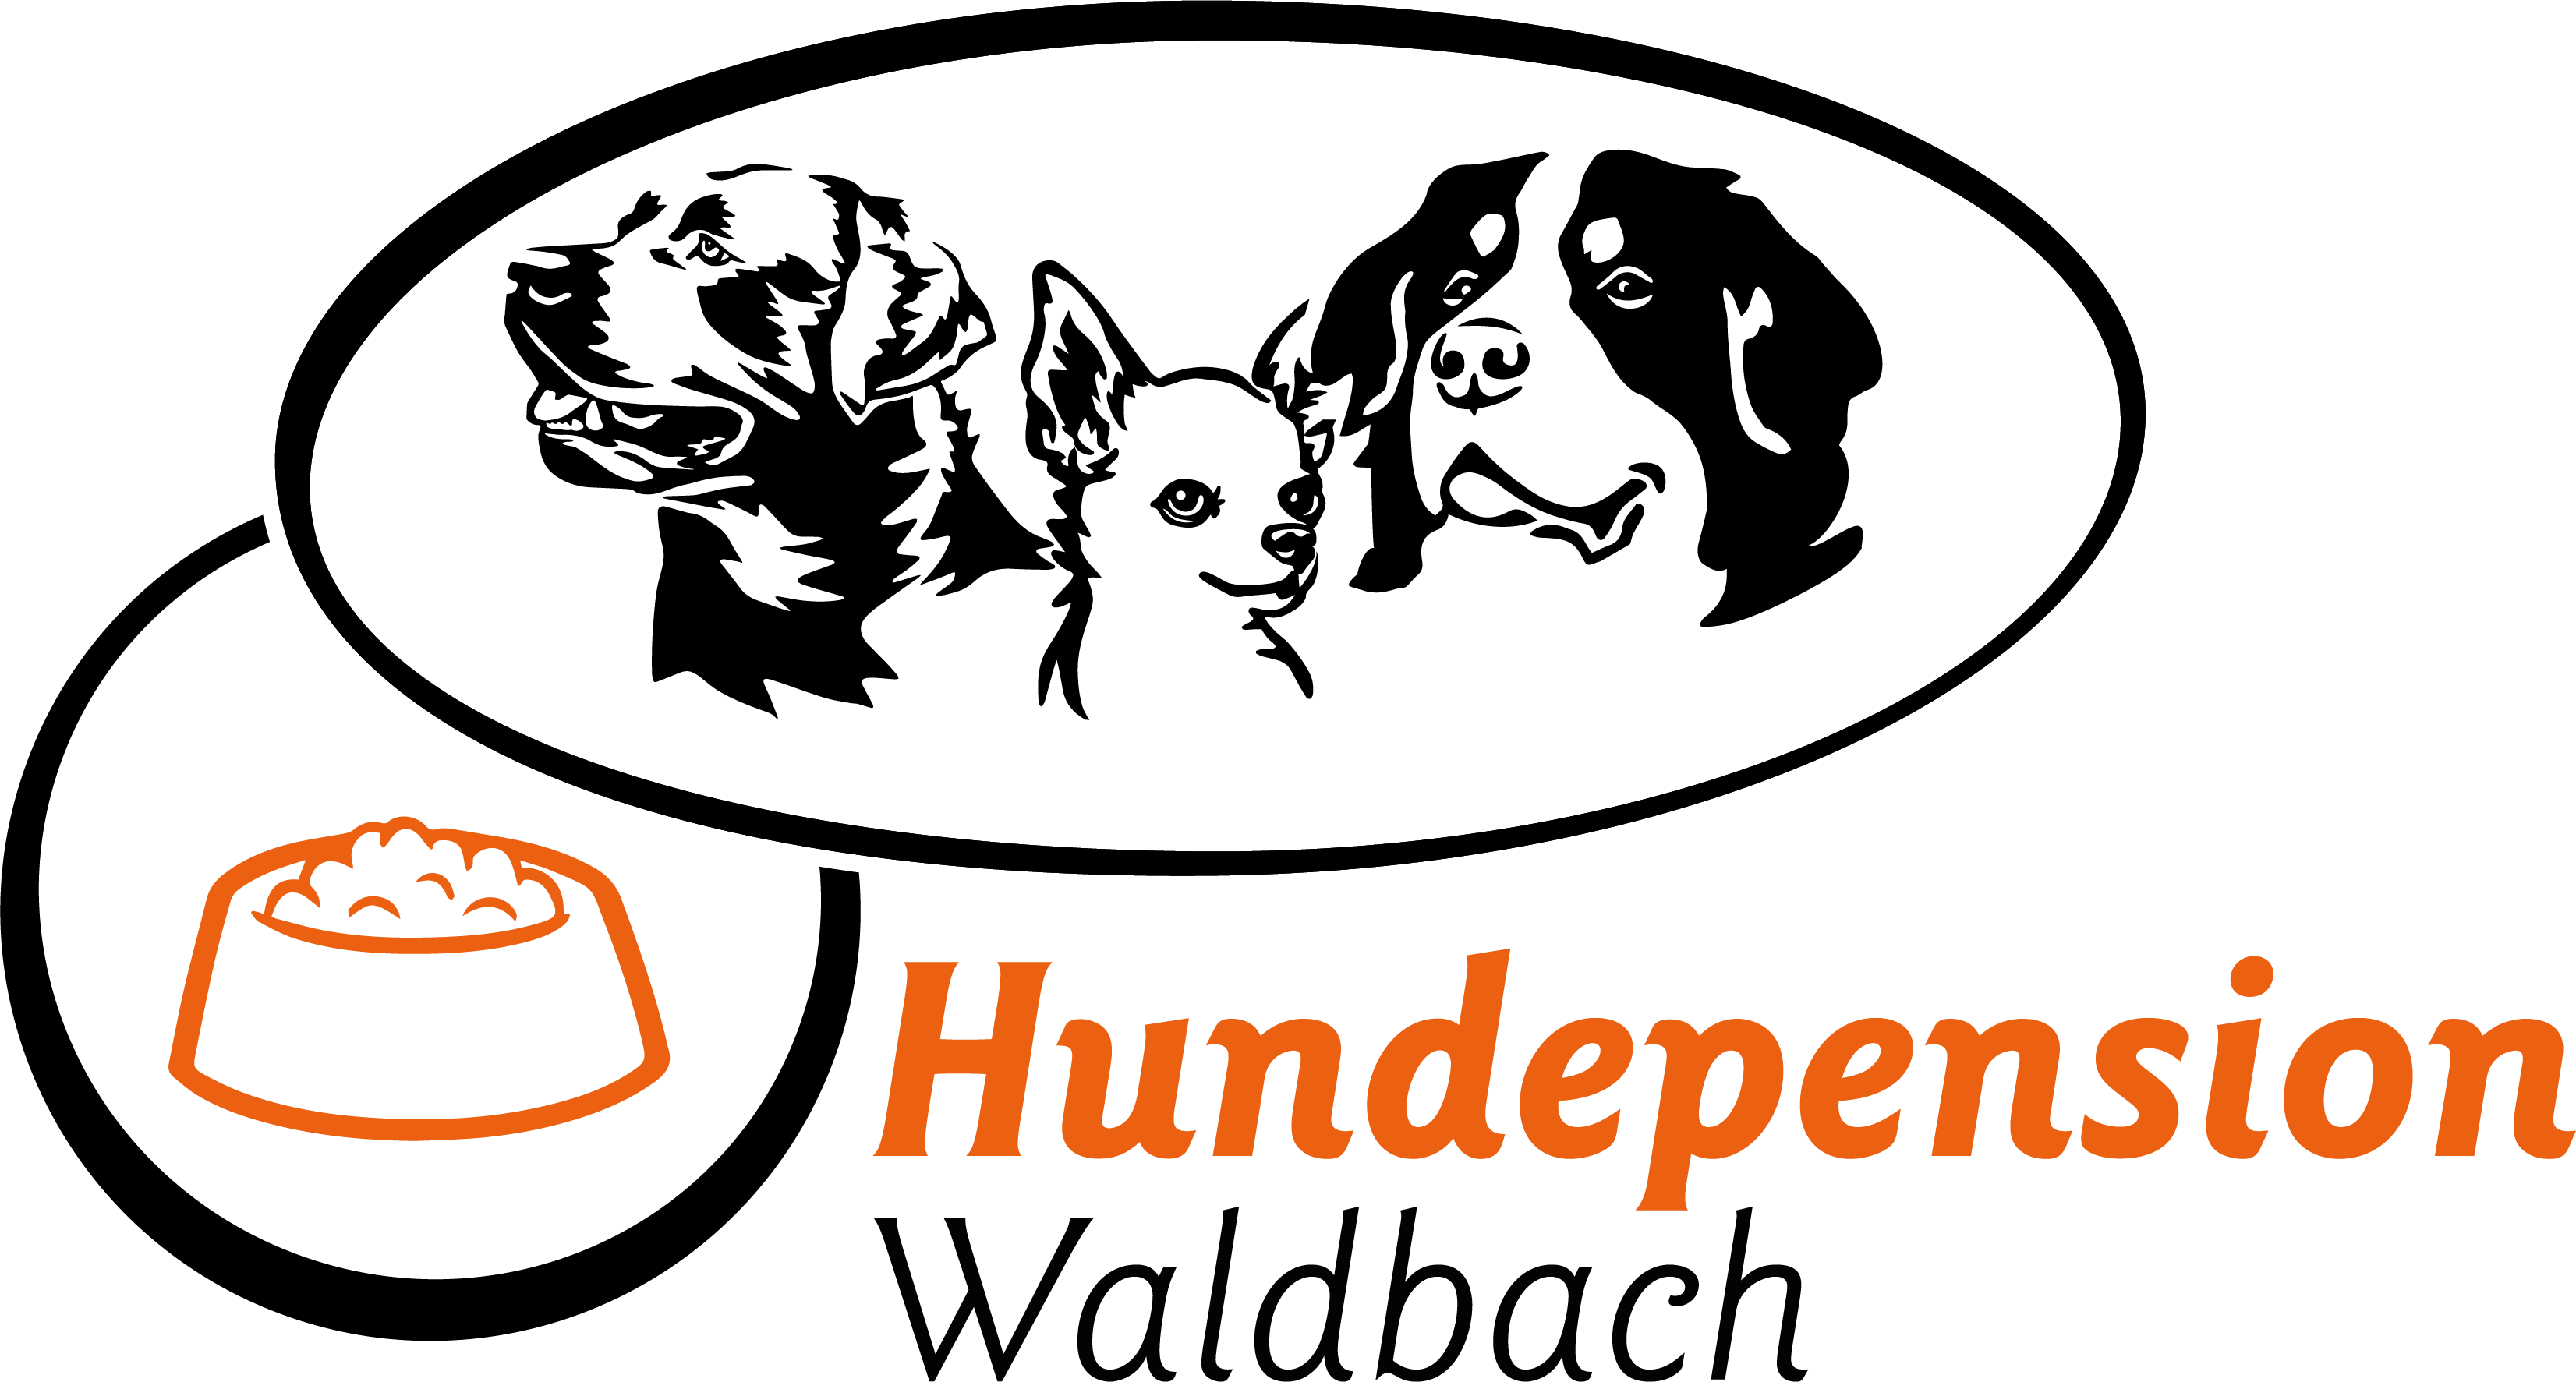 image-11832767-Logo_Hundepension-45c48.png